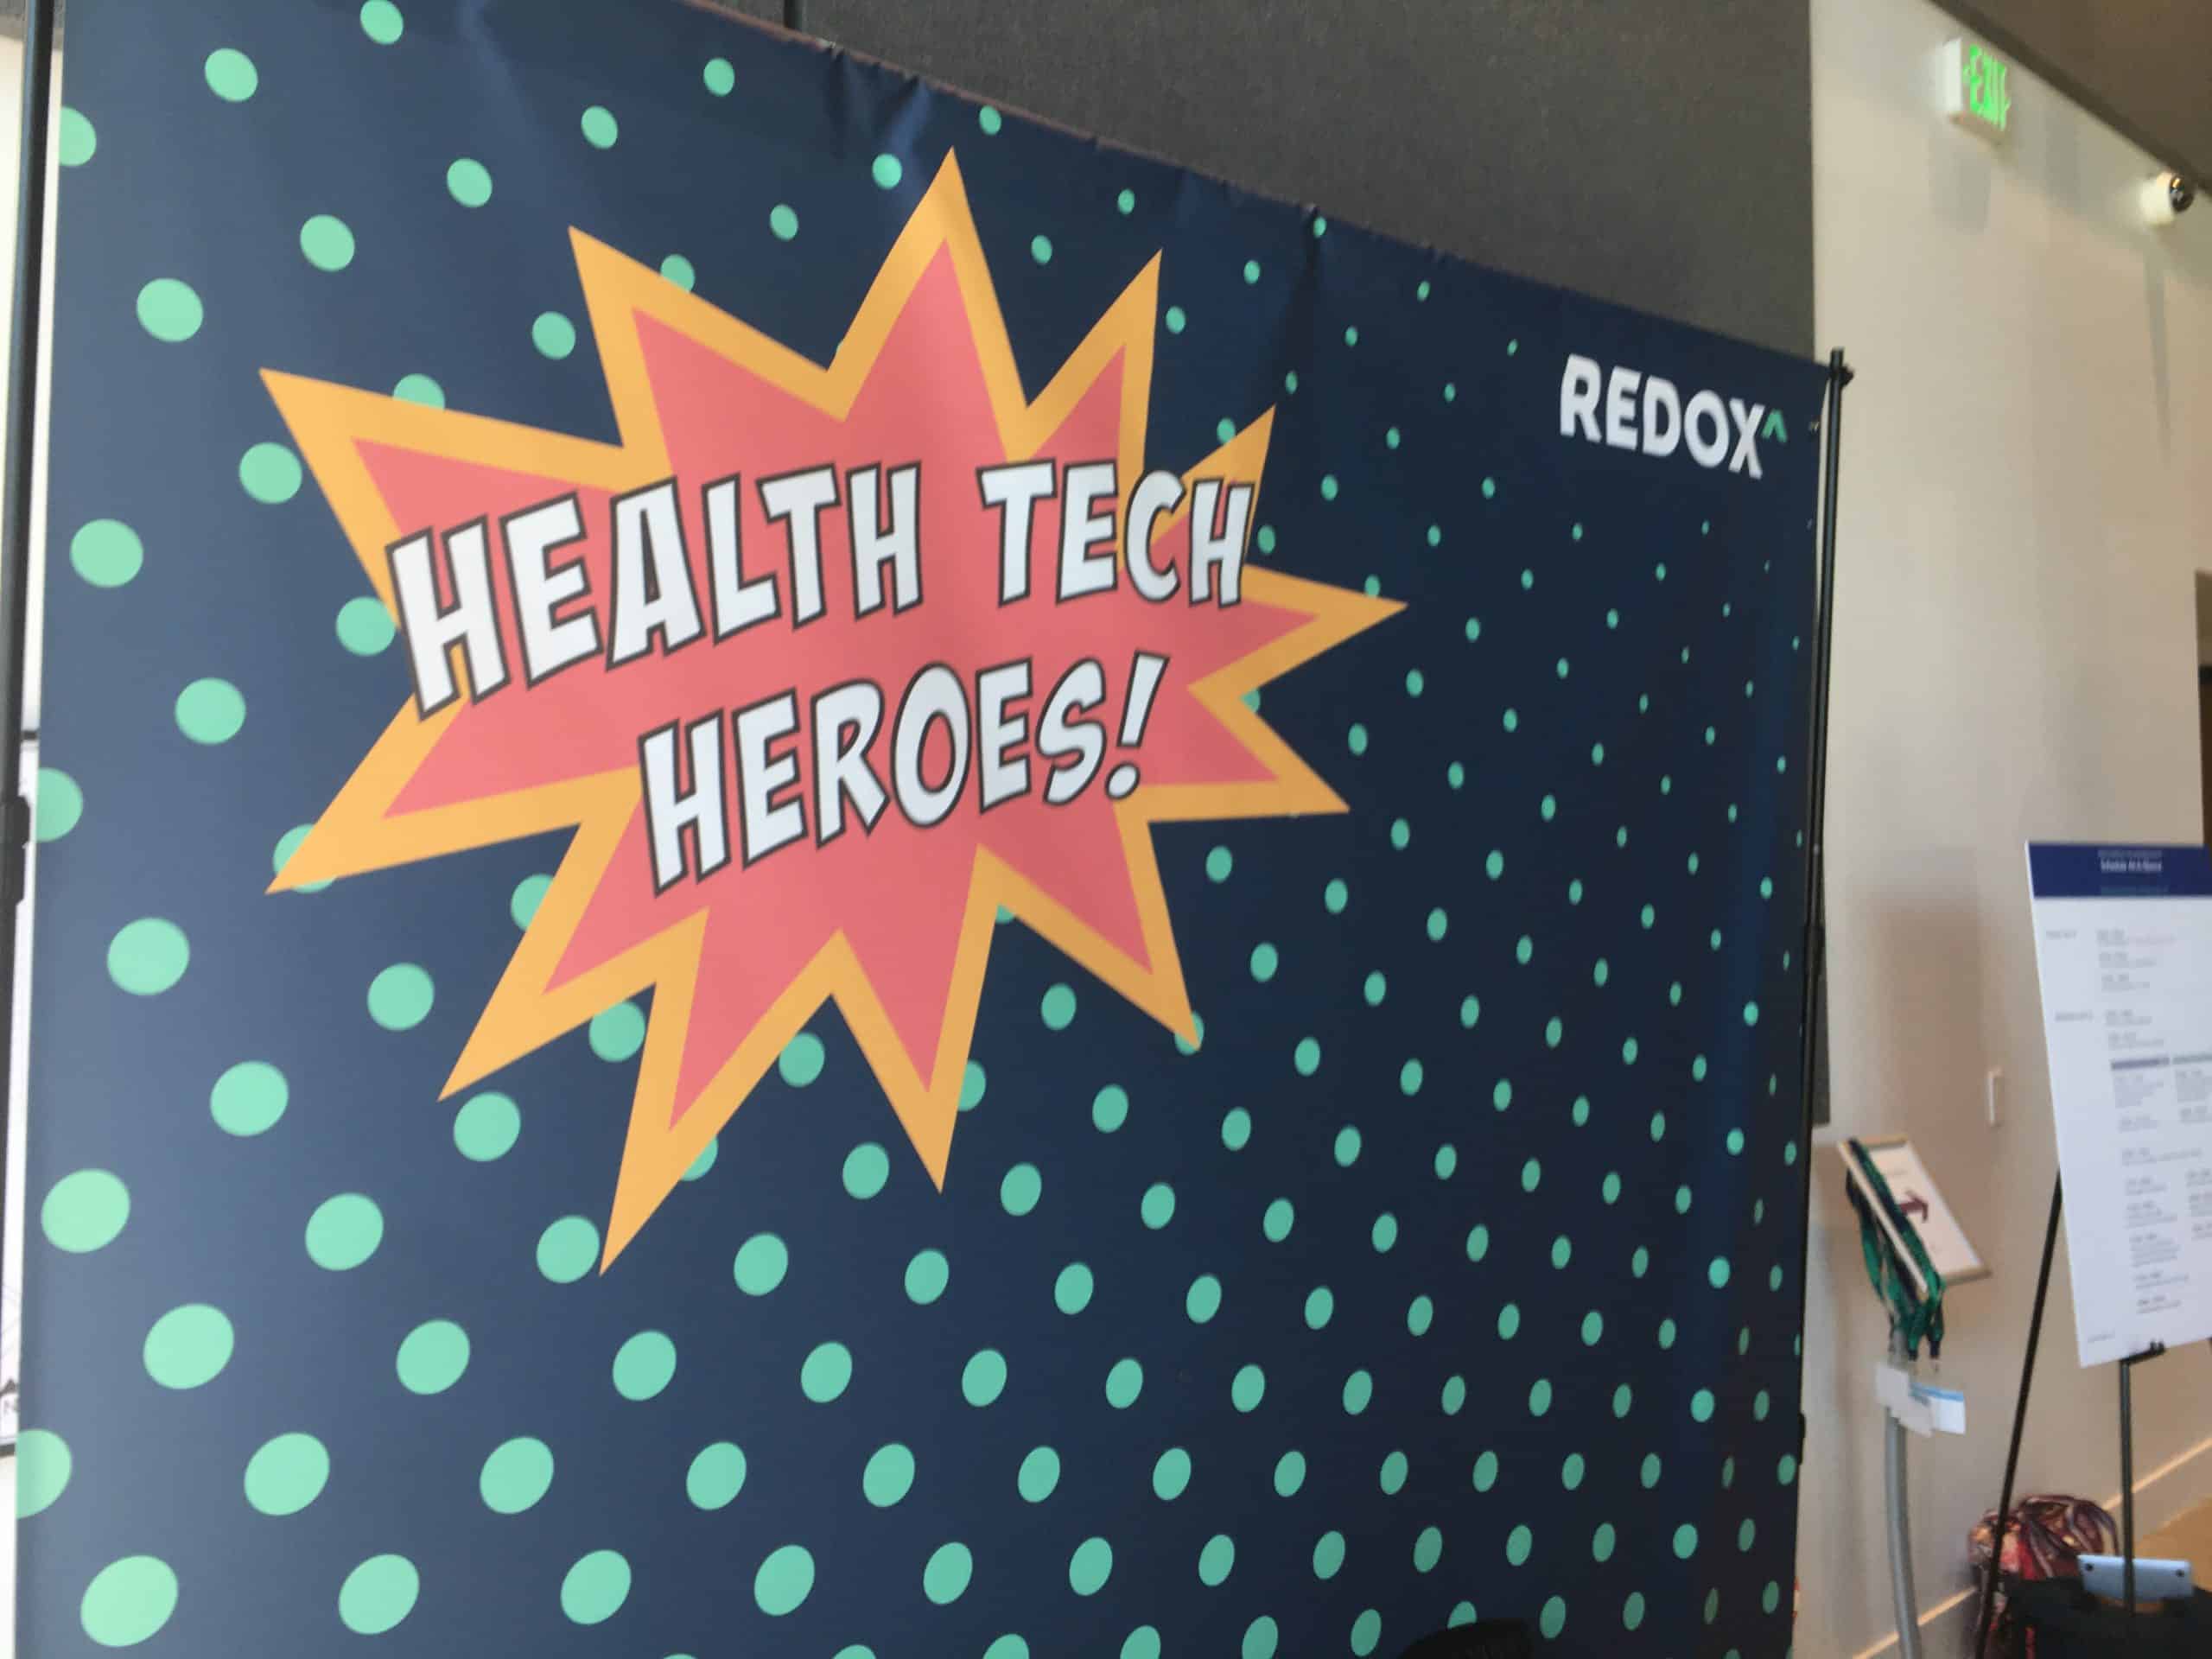 Redox Health Tech Heroes banner - Paubox